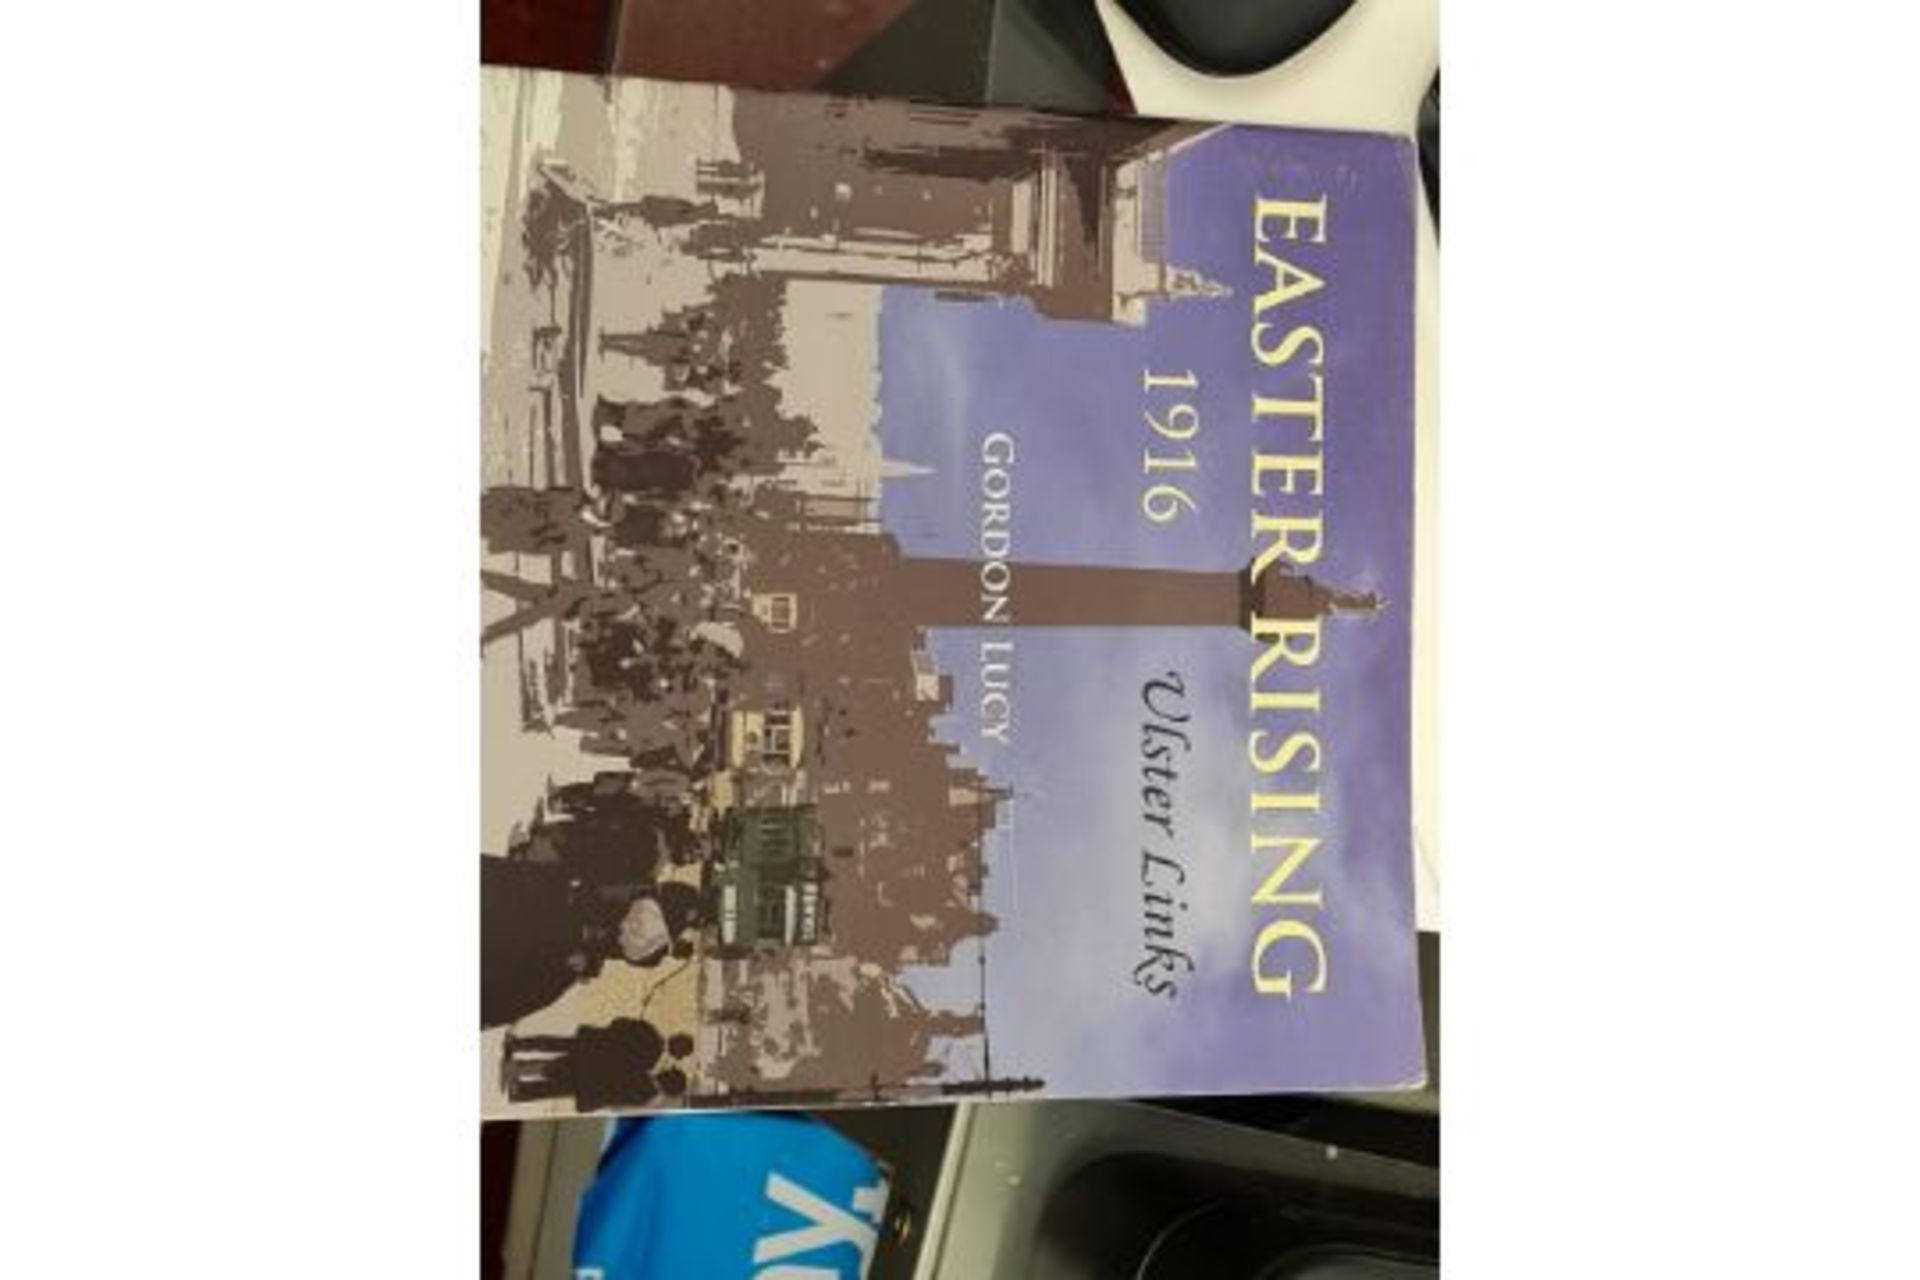 Easter rising book